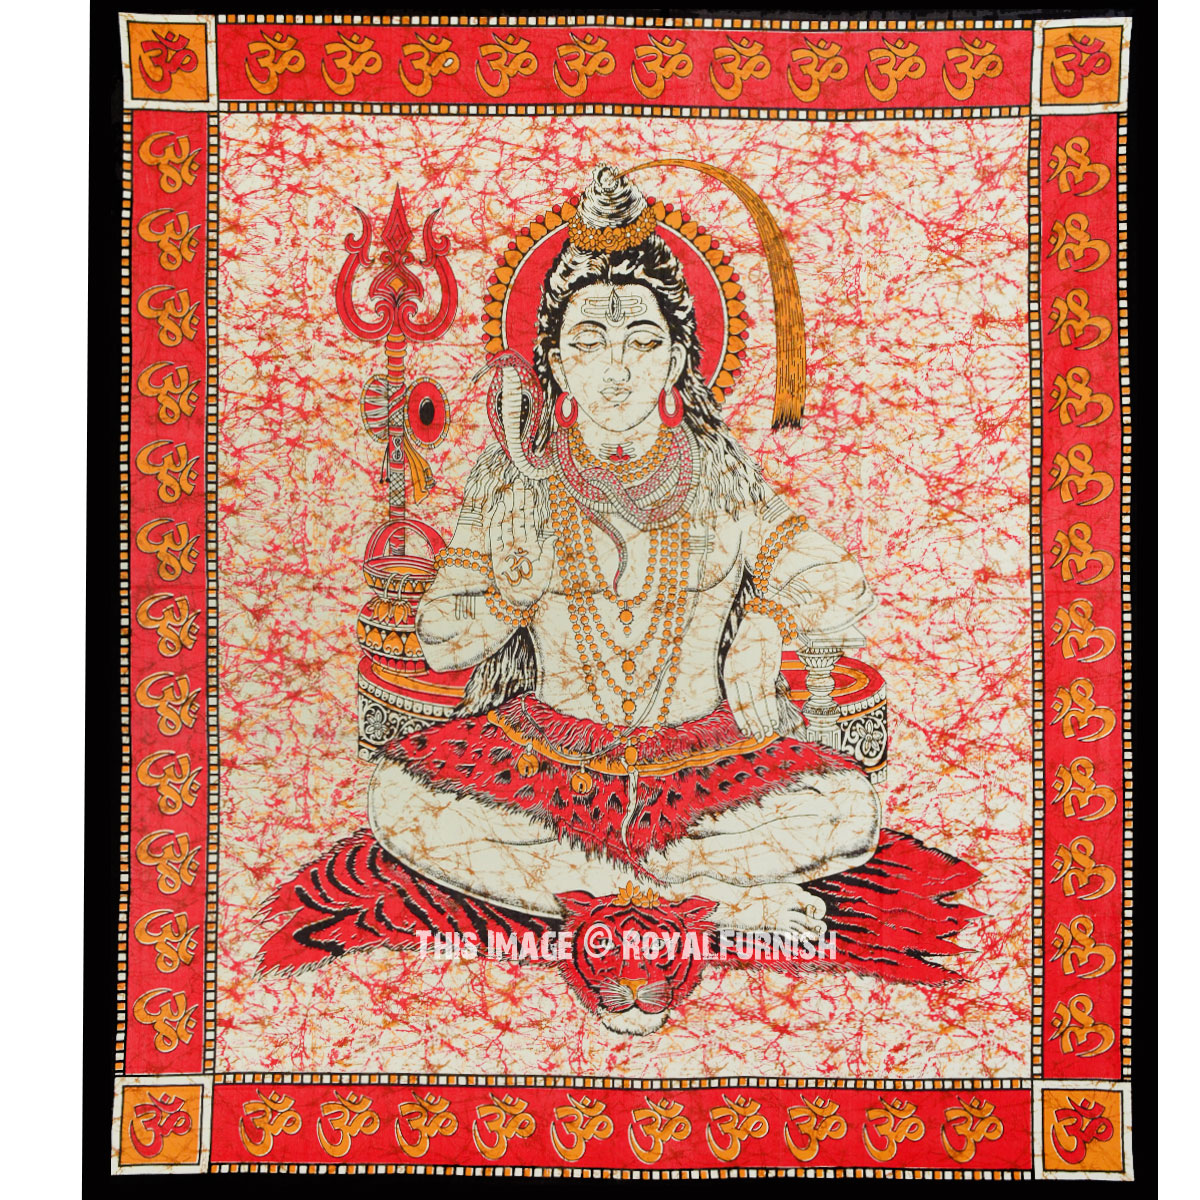 SMOKING Shiva Tapestry Hindu God Yoga Spiritual Room Wall Hanging POSTER